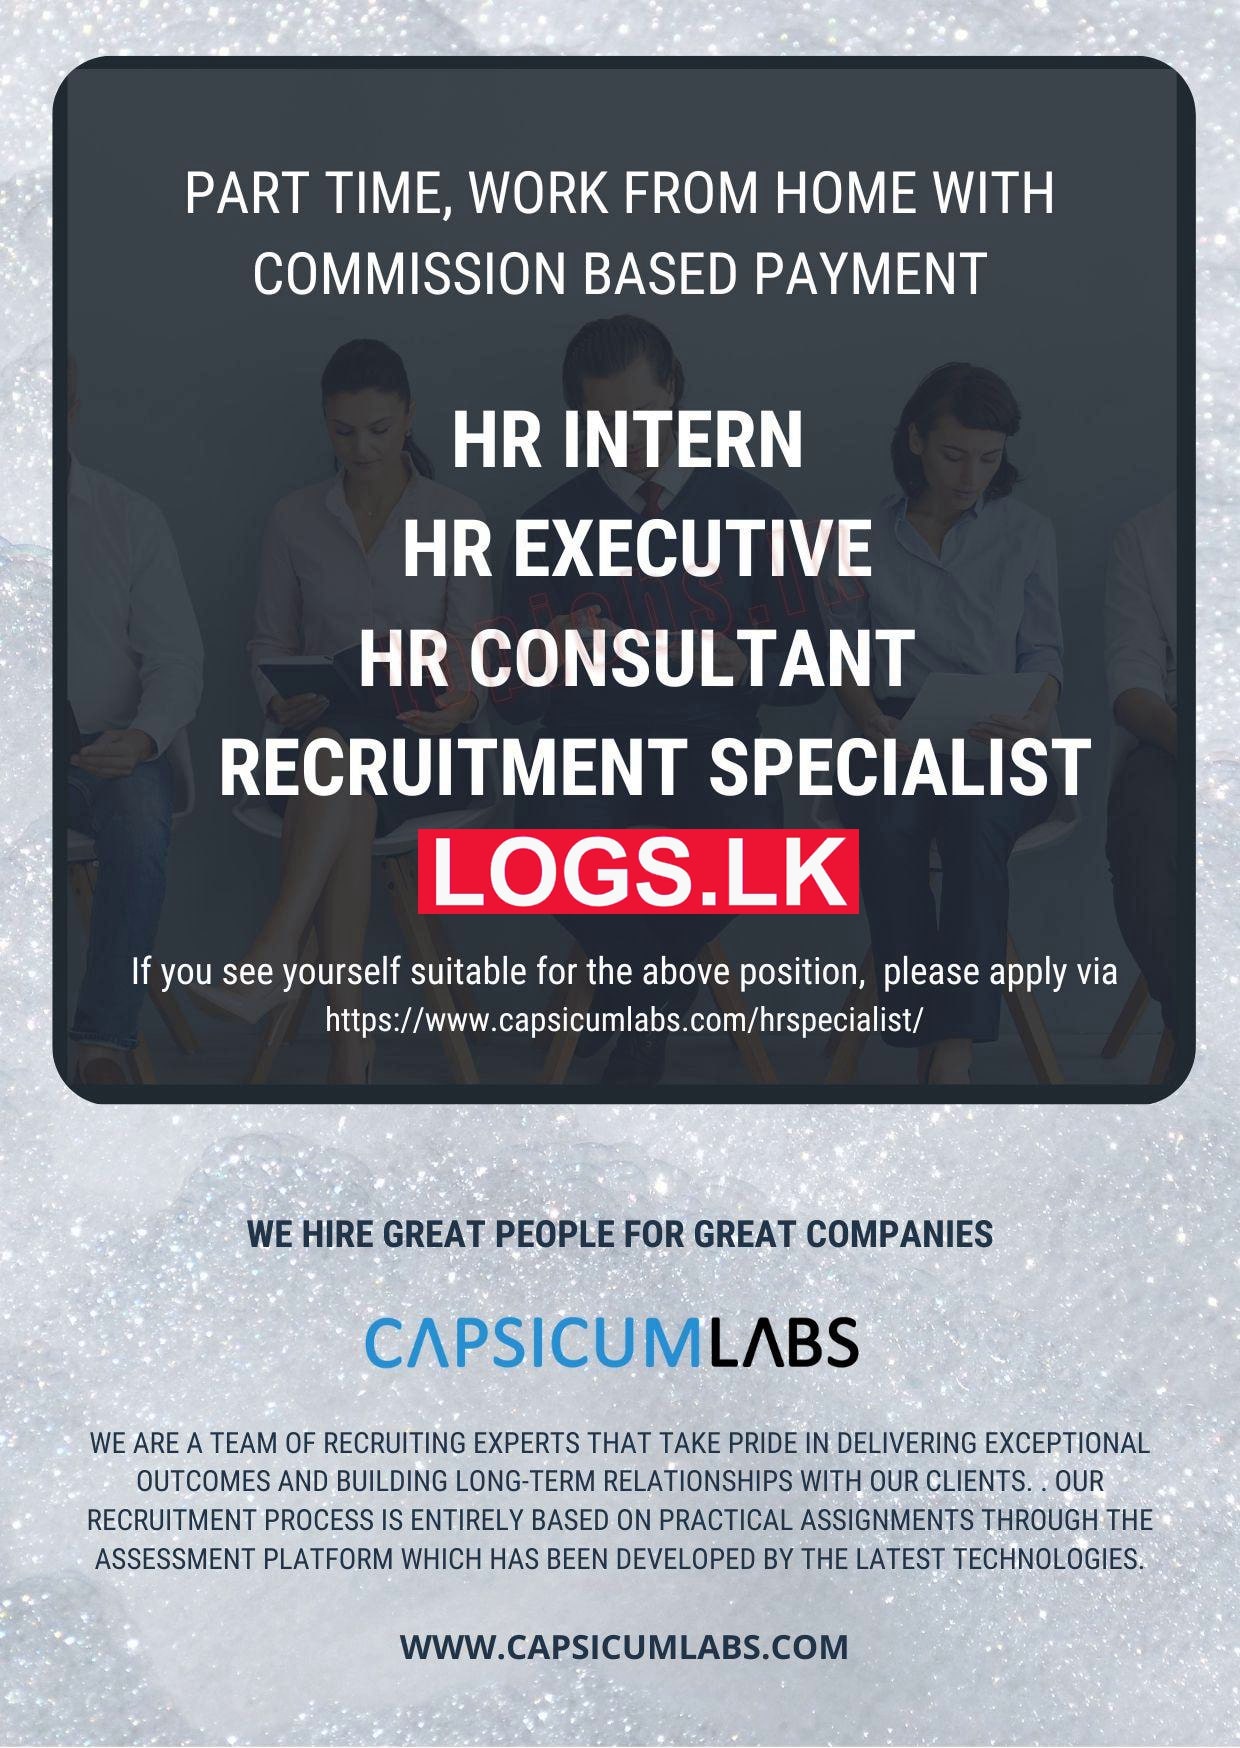 HR Intern / HR Executive / HR Consultant Vacancies at Capsicumlabs Job Vacancies in Sri Lanka